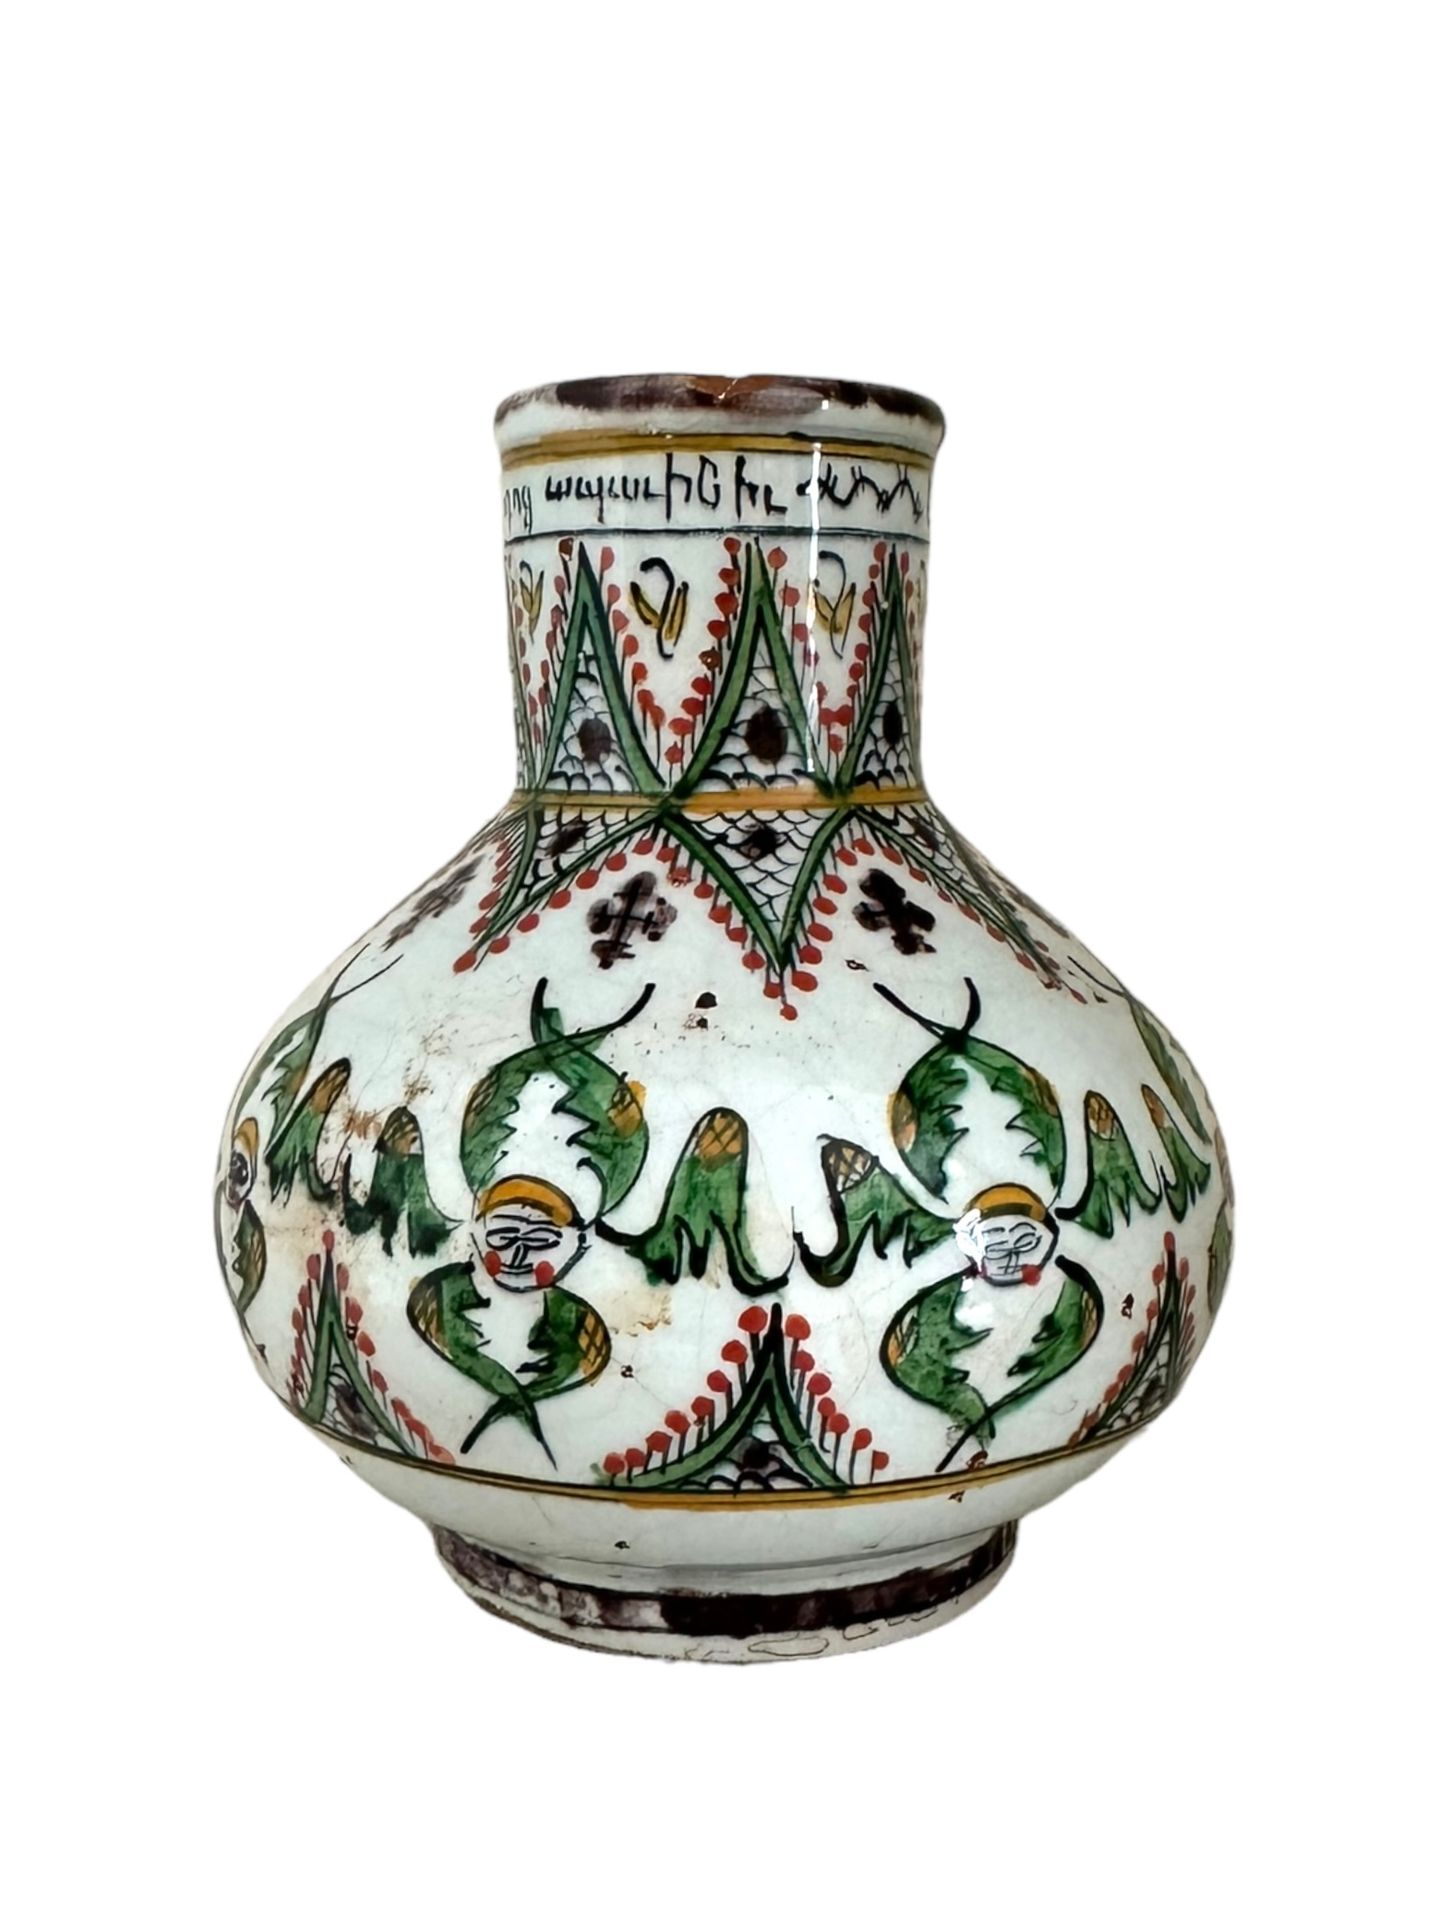 Kütahya Ceramic Bottle 白底饰有绿色、黄色和珊瑚红的 Kütahya 陶瓷瓶，上面有 Serafin 天使和亚美尼亚文字。尺寸为 15x1&hellip;